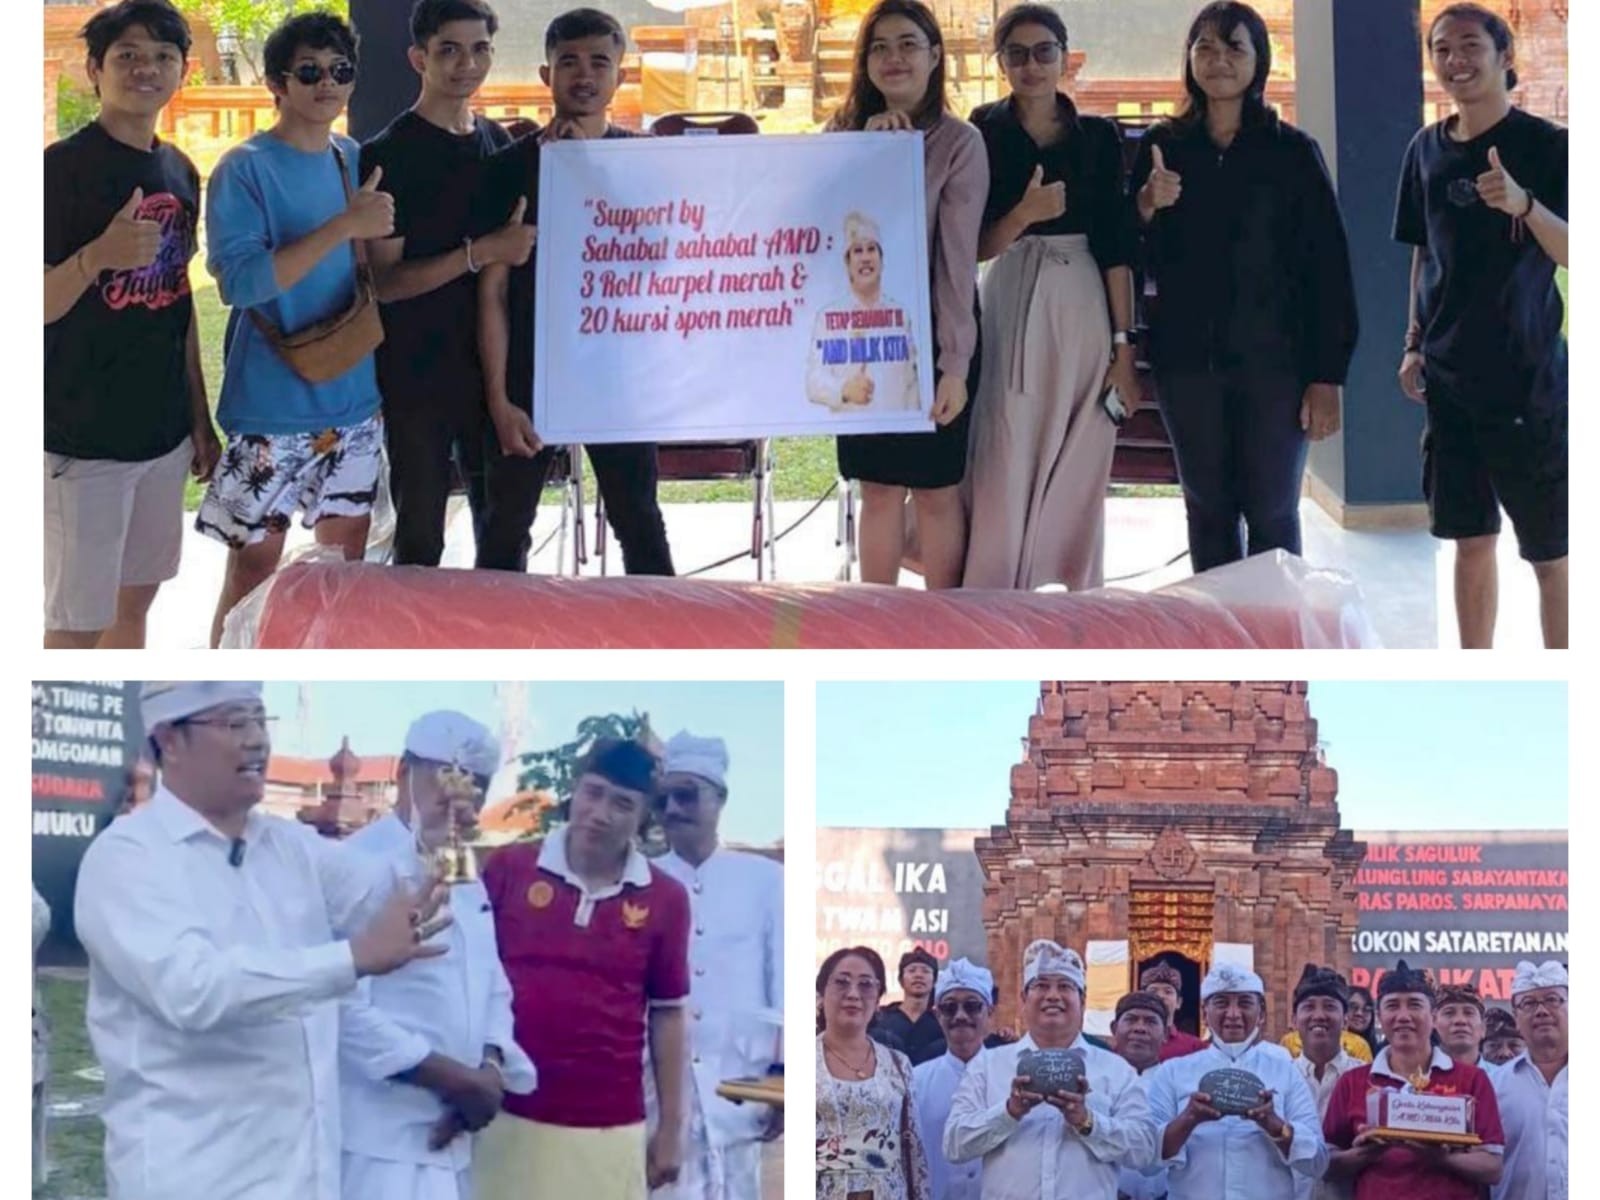 Agung Manik Danendra Berjiwa Nasionalis Sambangi Rumah Kebangsaan Bali Hibahkan Genta Berlapis Emas, Sahabat AMD Sumbang Karpet dan Kursi